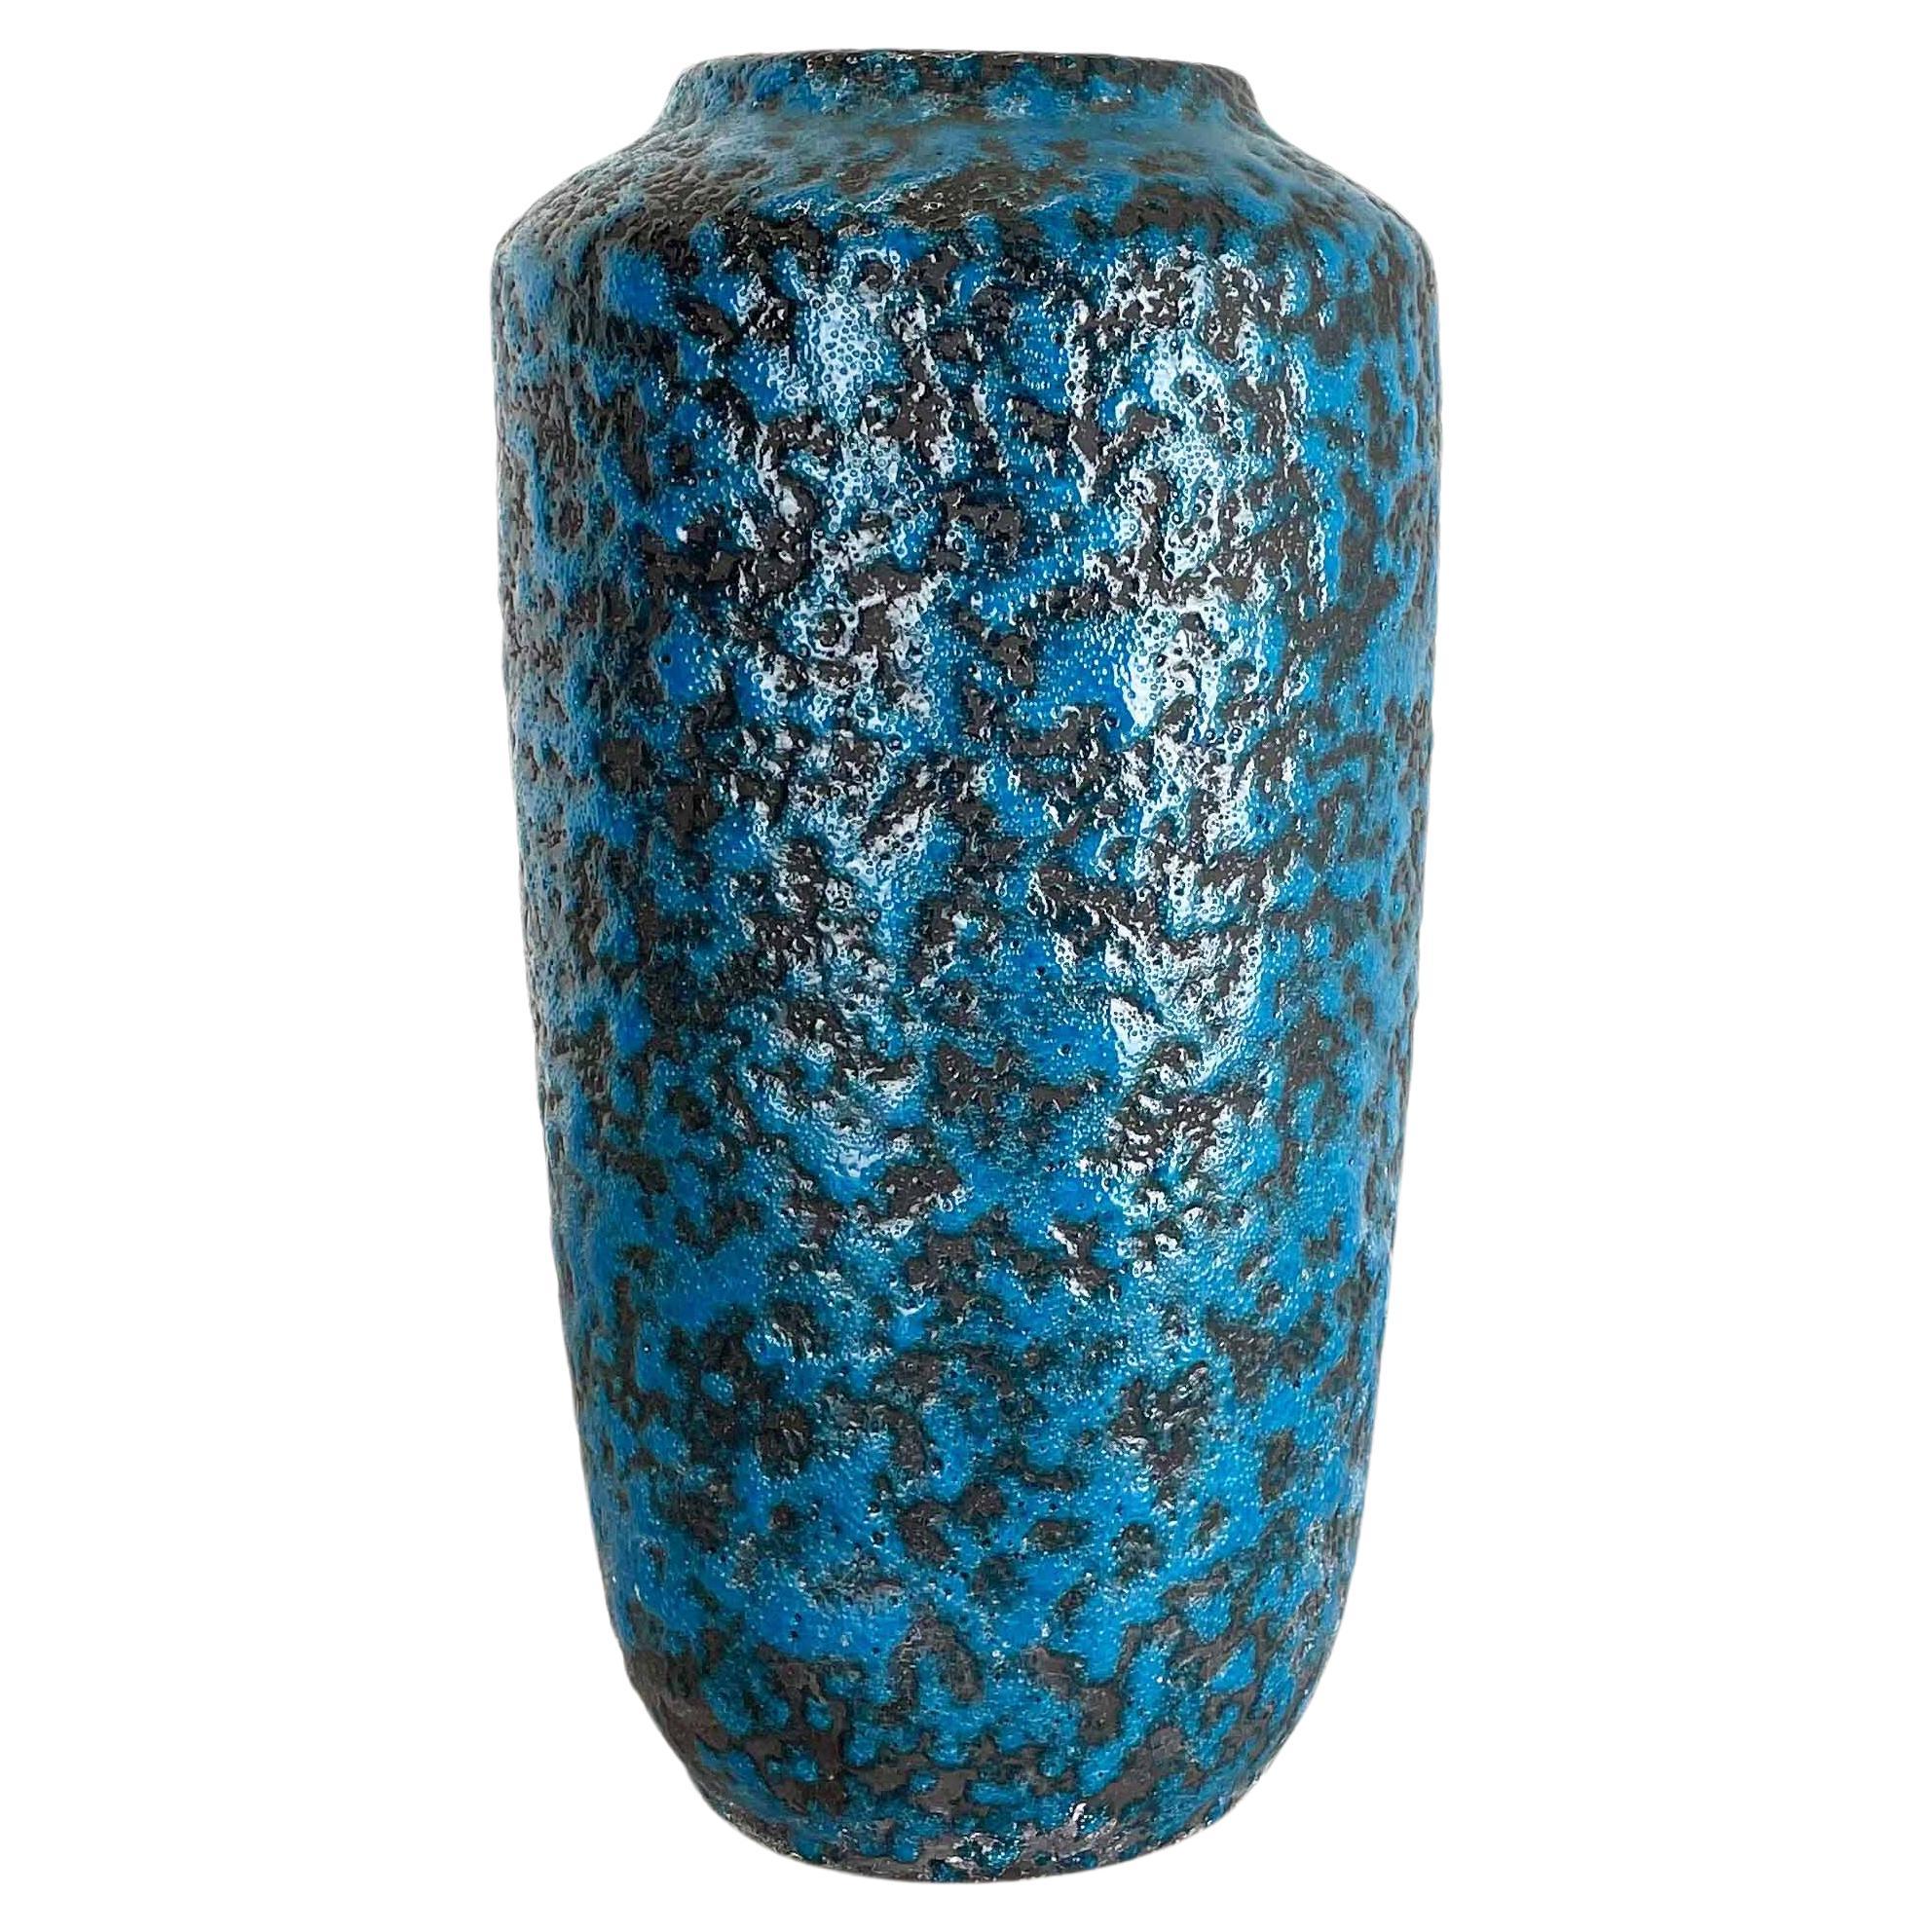 Super Color Crusty Fat Lava BLUE 38cm Bodenvase Scheurich, Deutschland WGP, 1970er Jahre